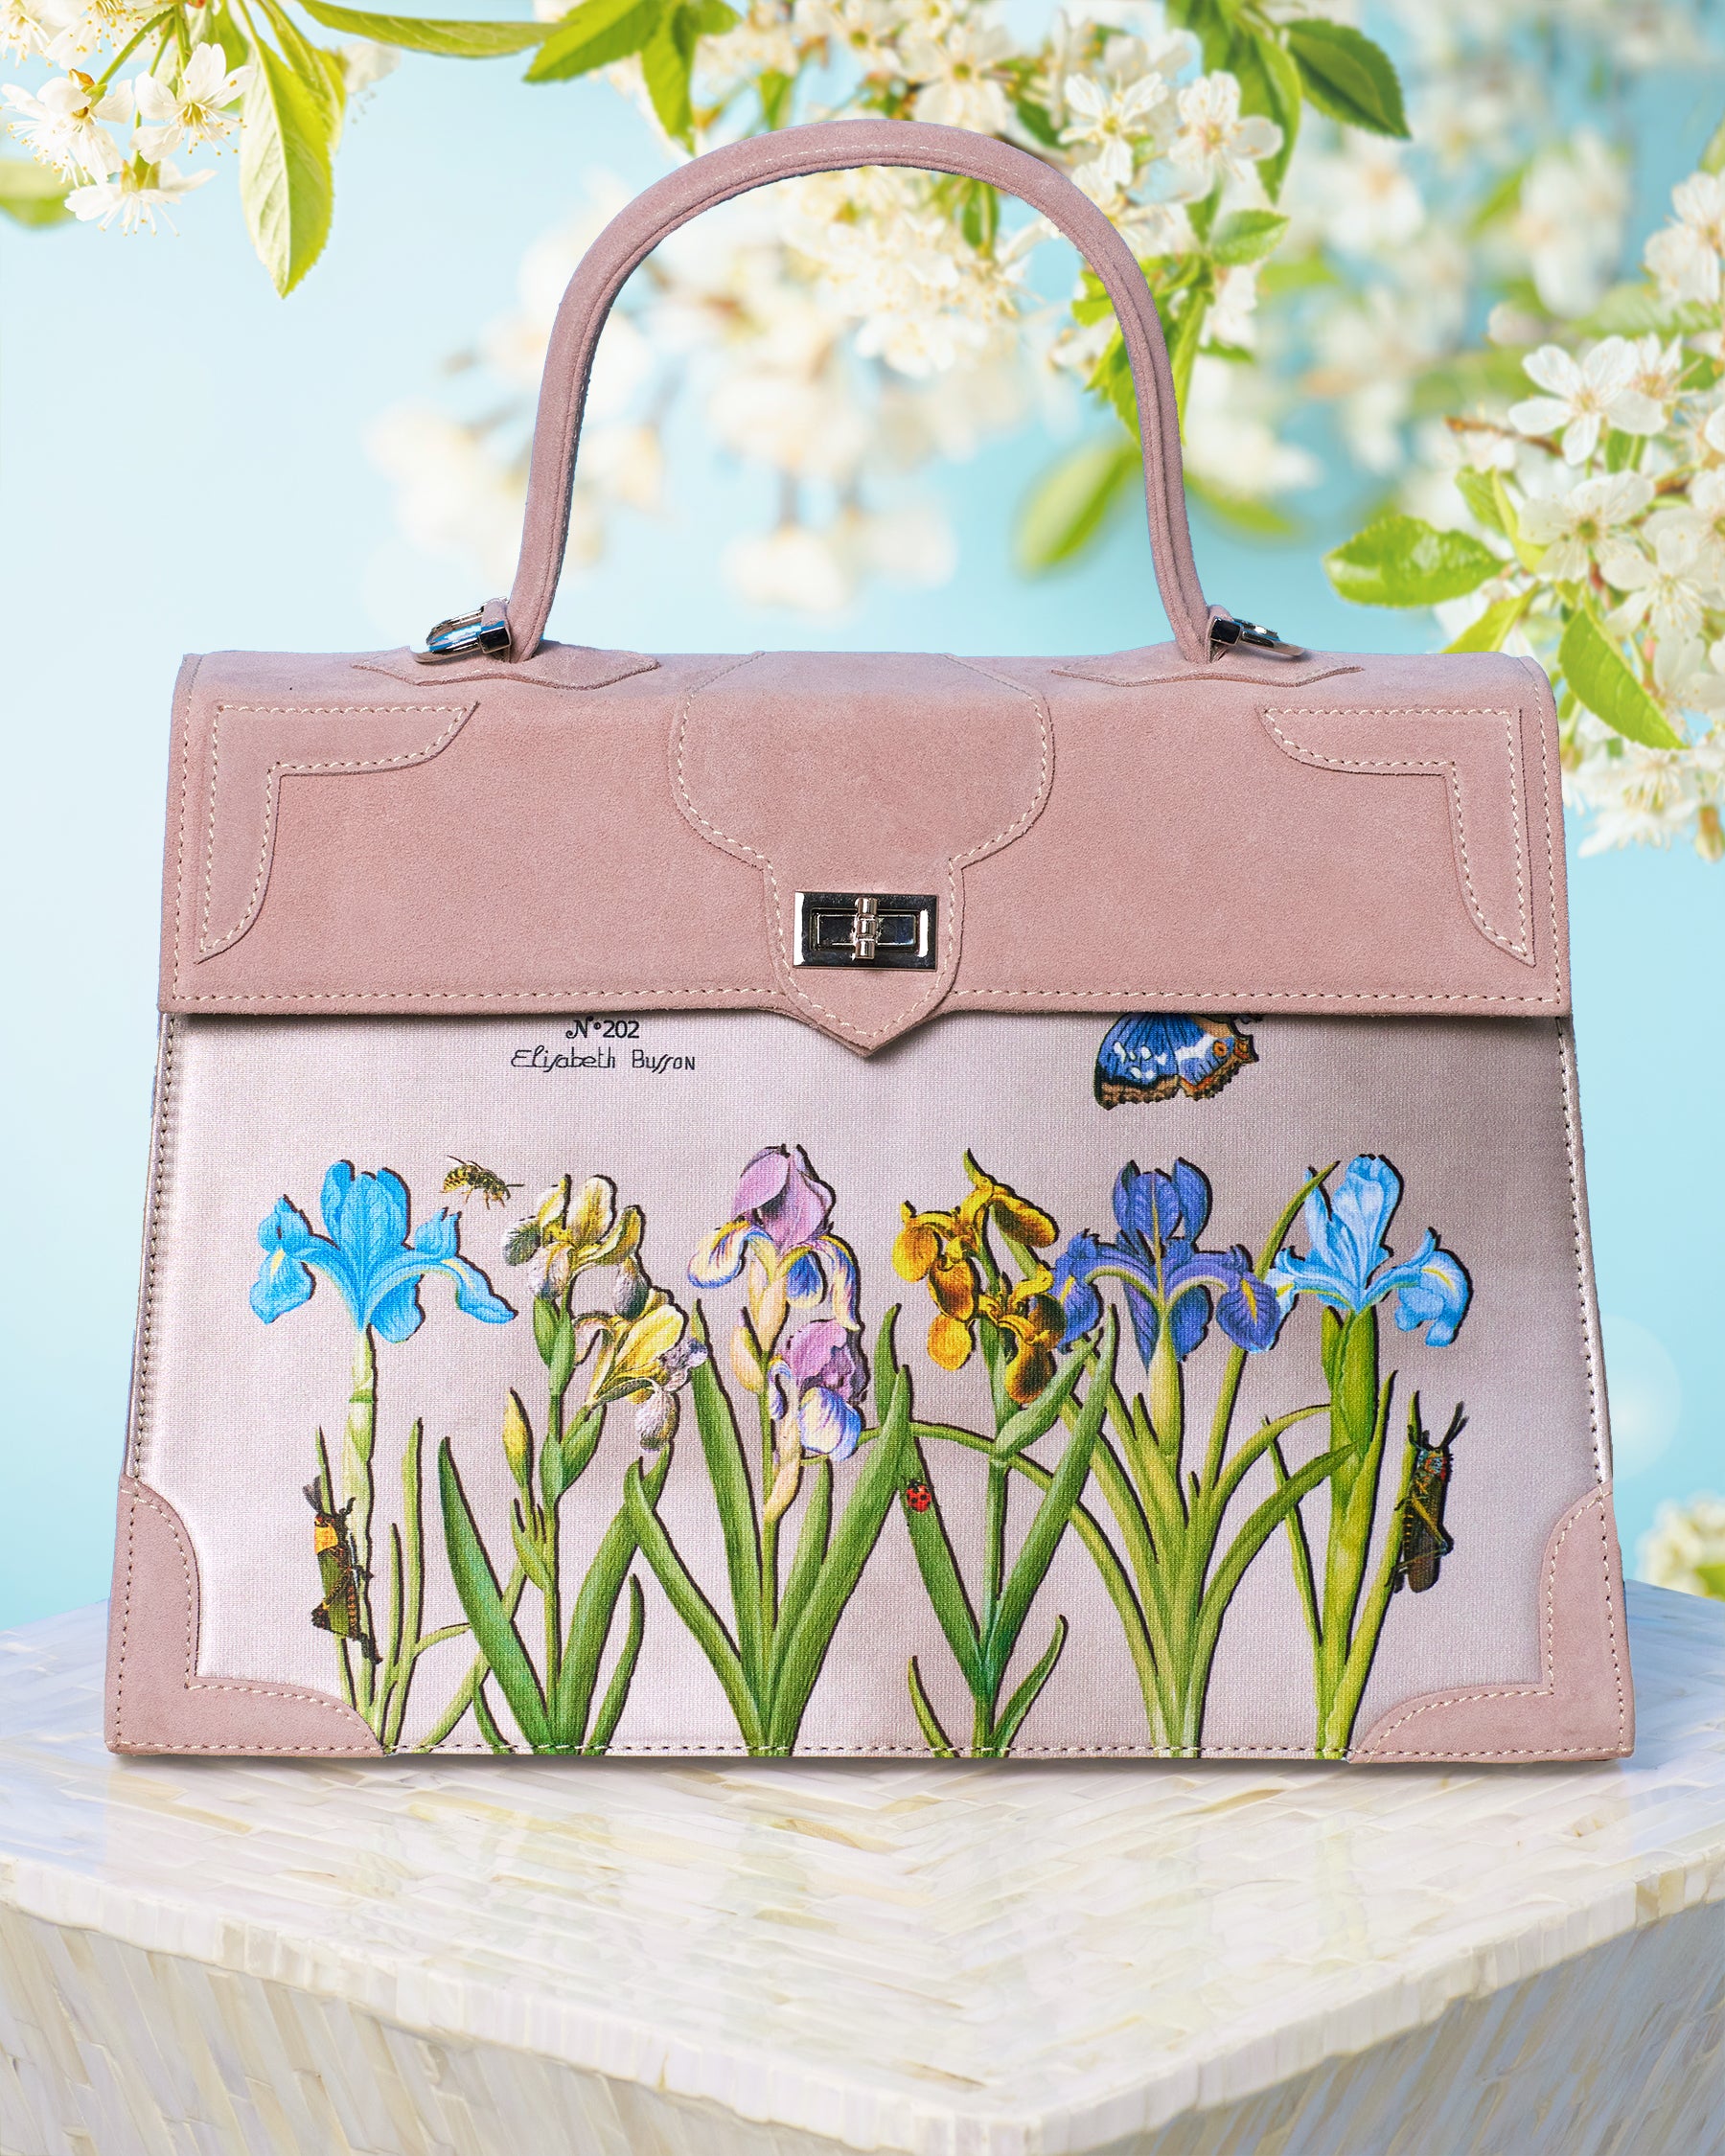 Marquise Paris Marquise Les Iris Top Handle Shoulder Bag in Pastel Pink-Front View